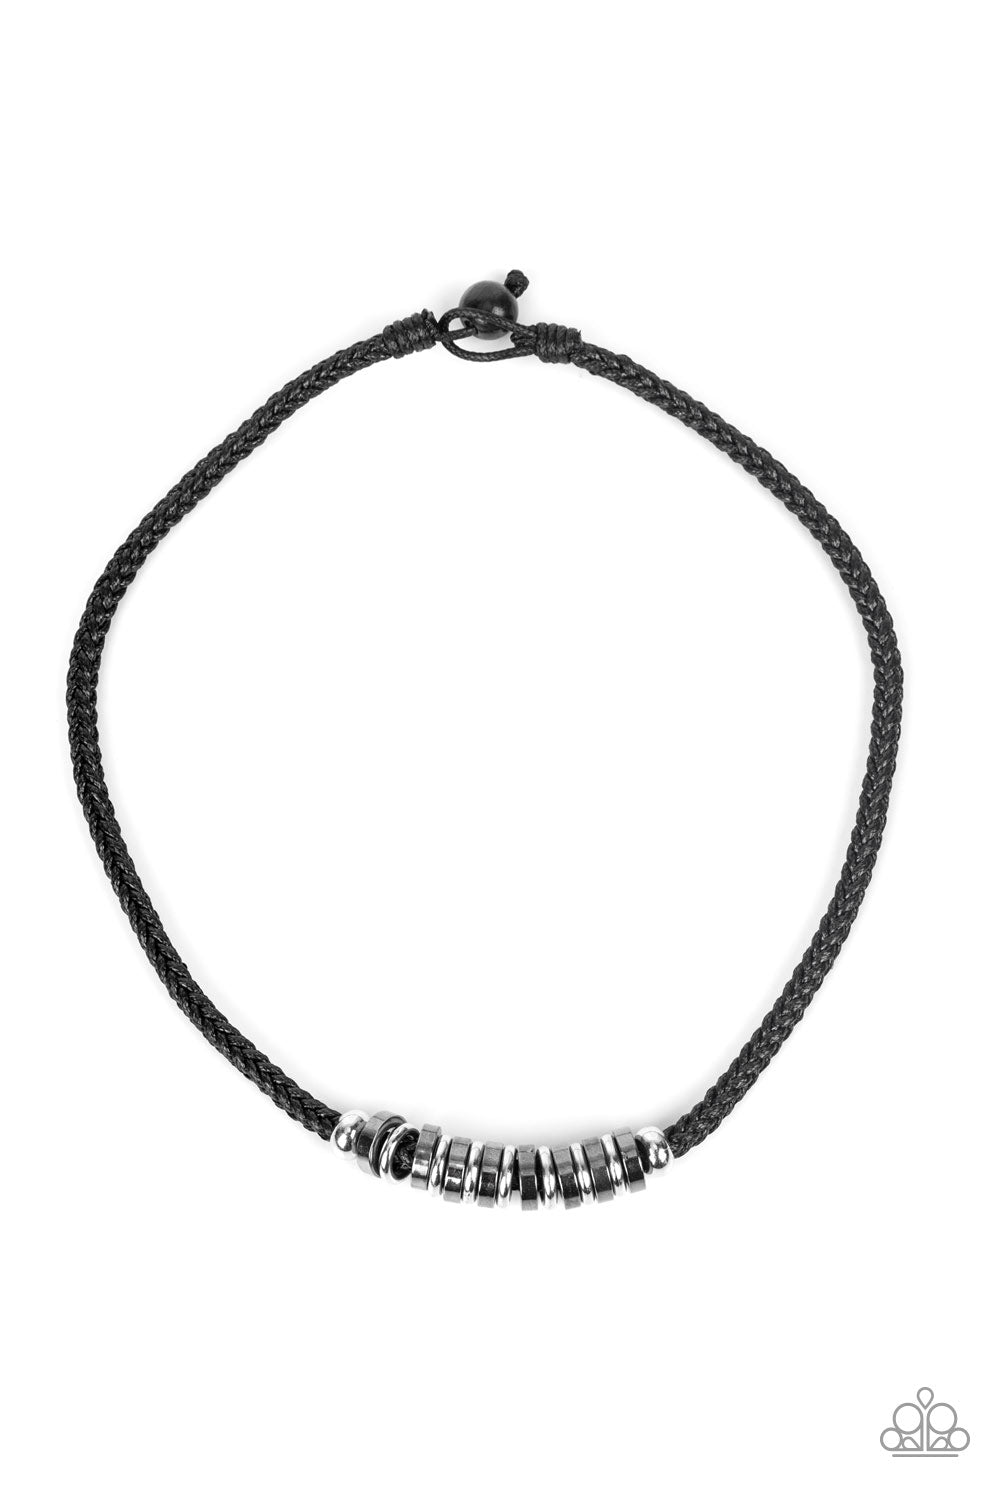 Bedazzle Paparazzi Necklace Pretty Me – Fashion - Primitive - Prize Accessories Mobile Boutique Black